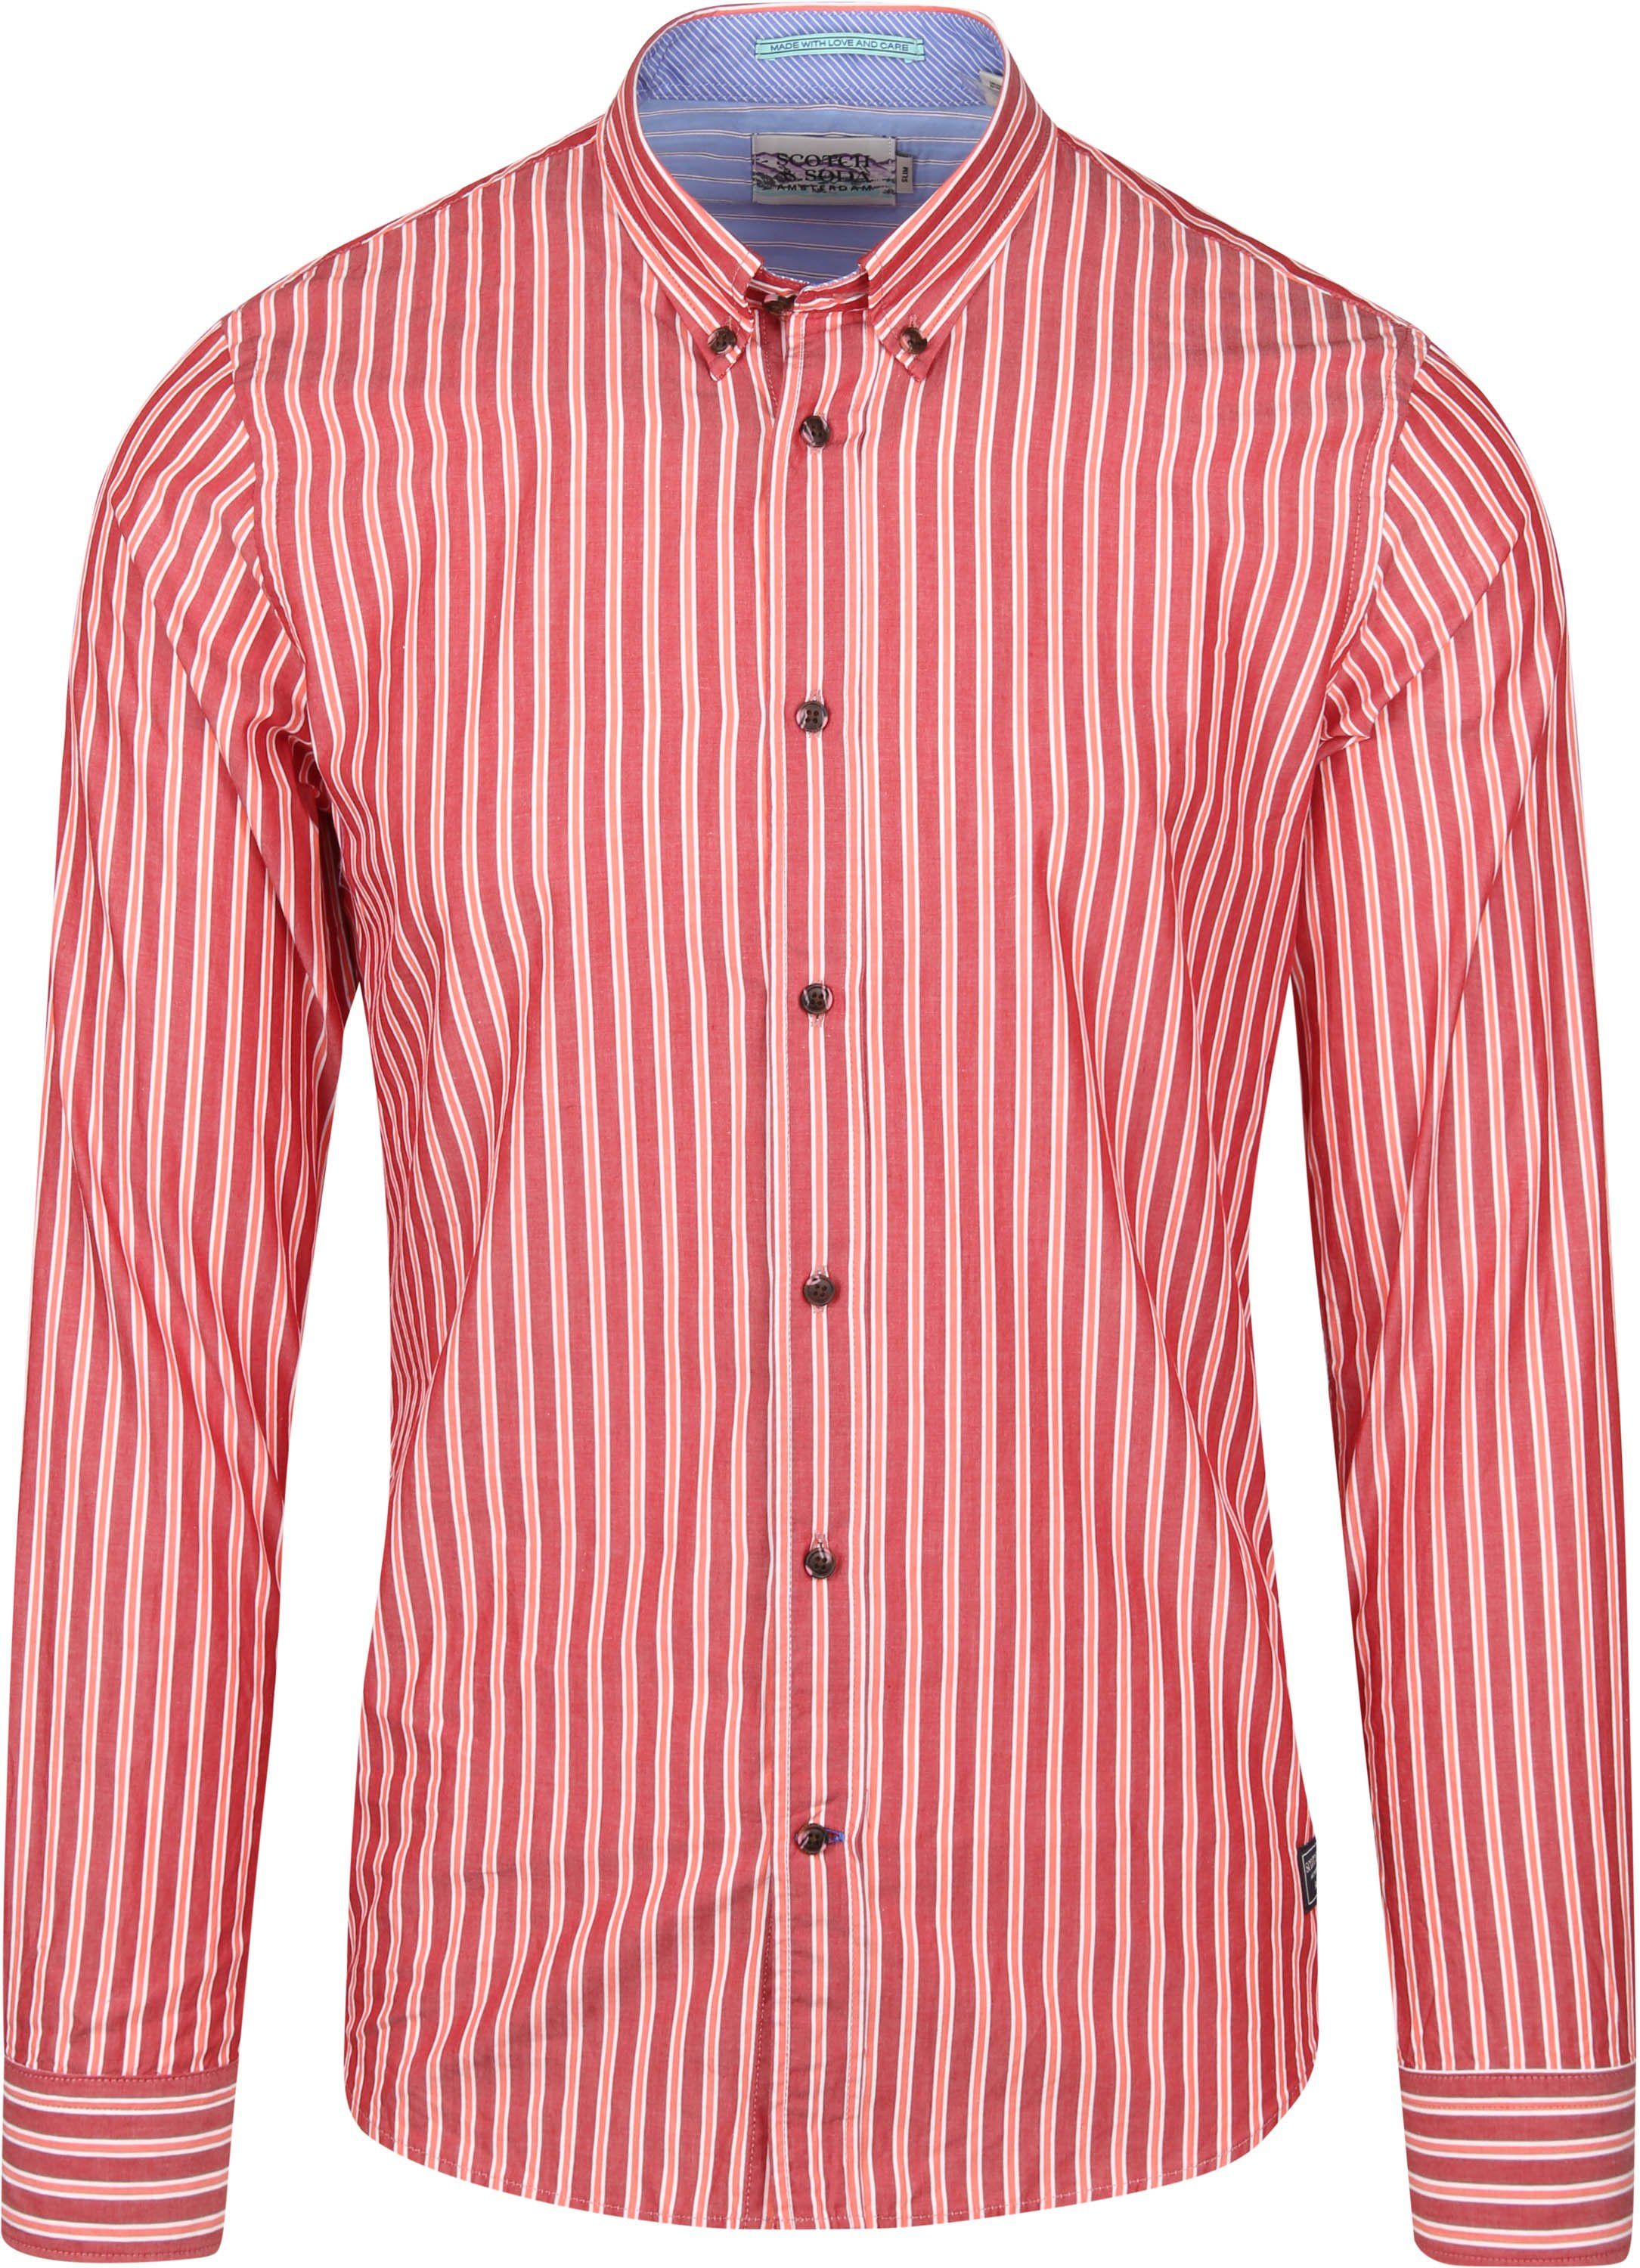 Scotch and Soda Shirt Striped Red size L